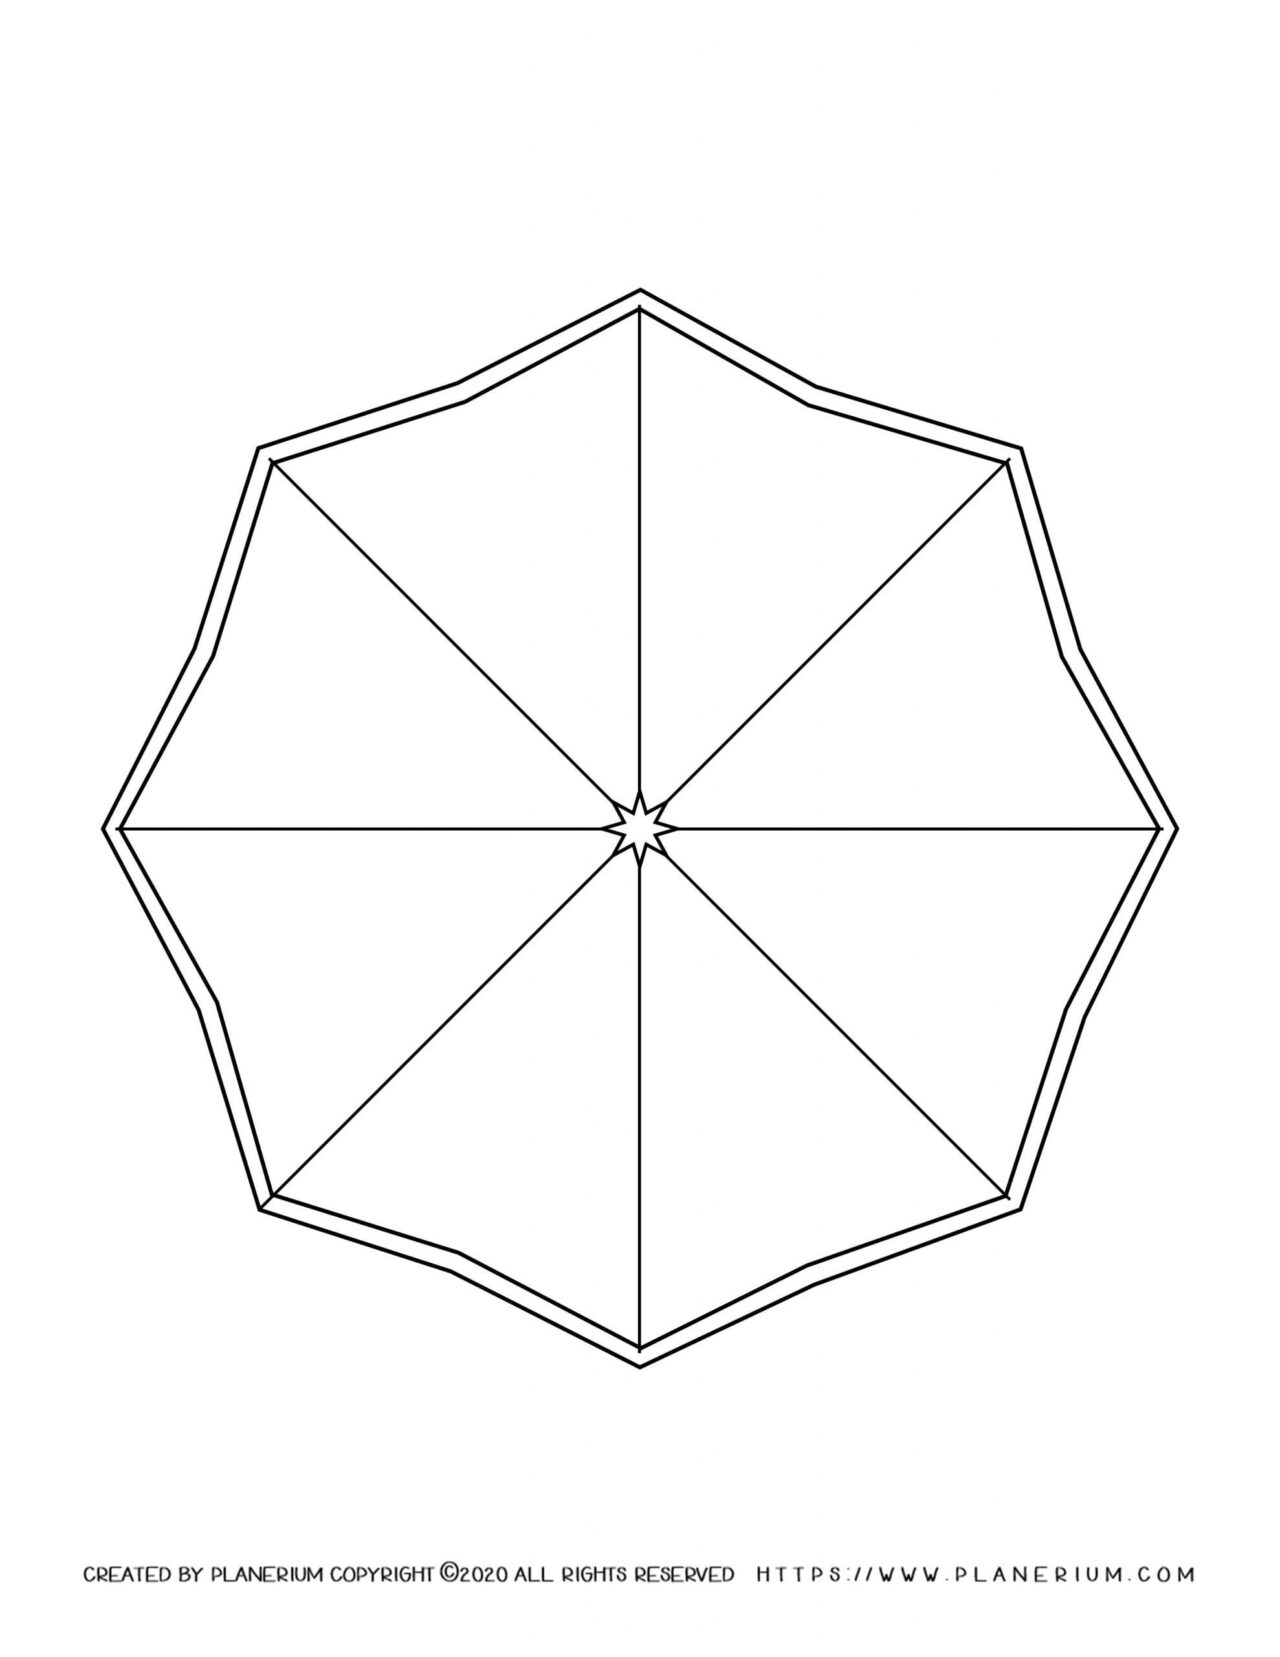 Spring coloring page - Octagon shaped umbrella